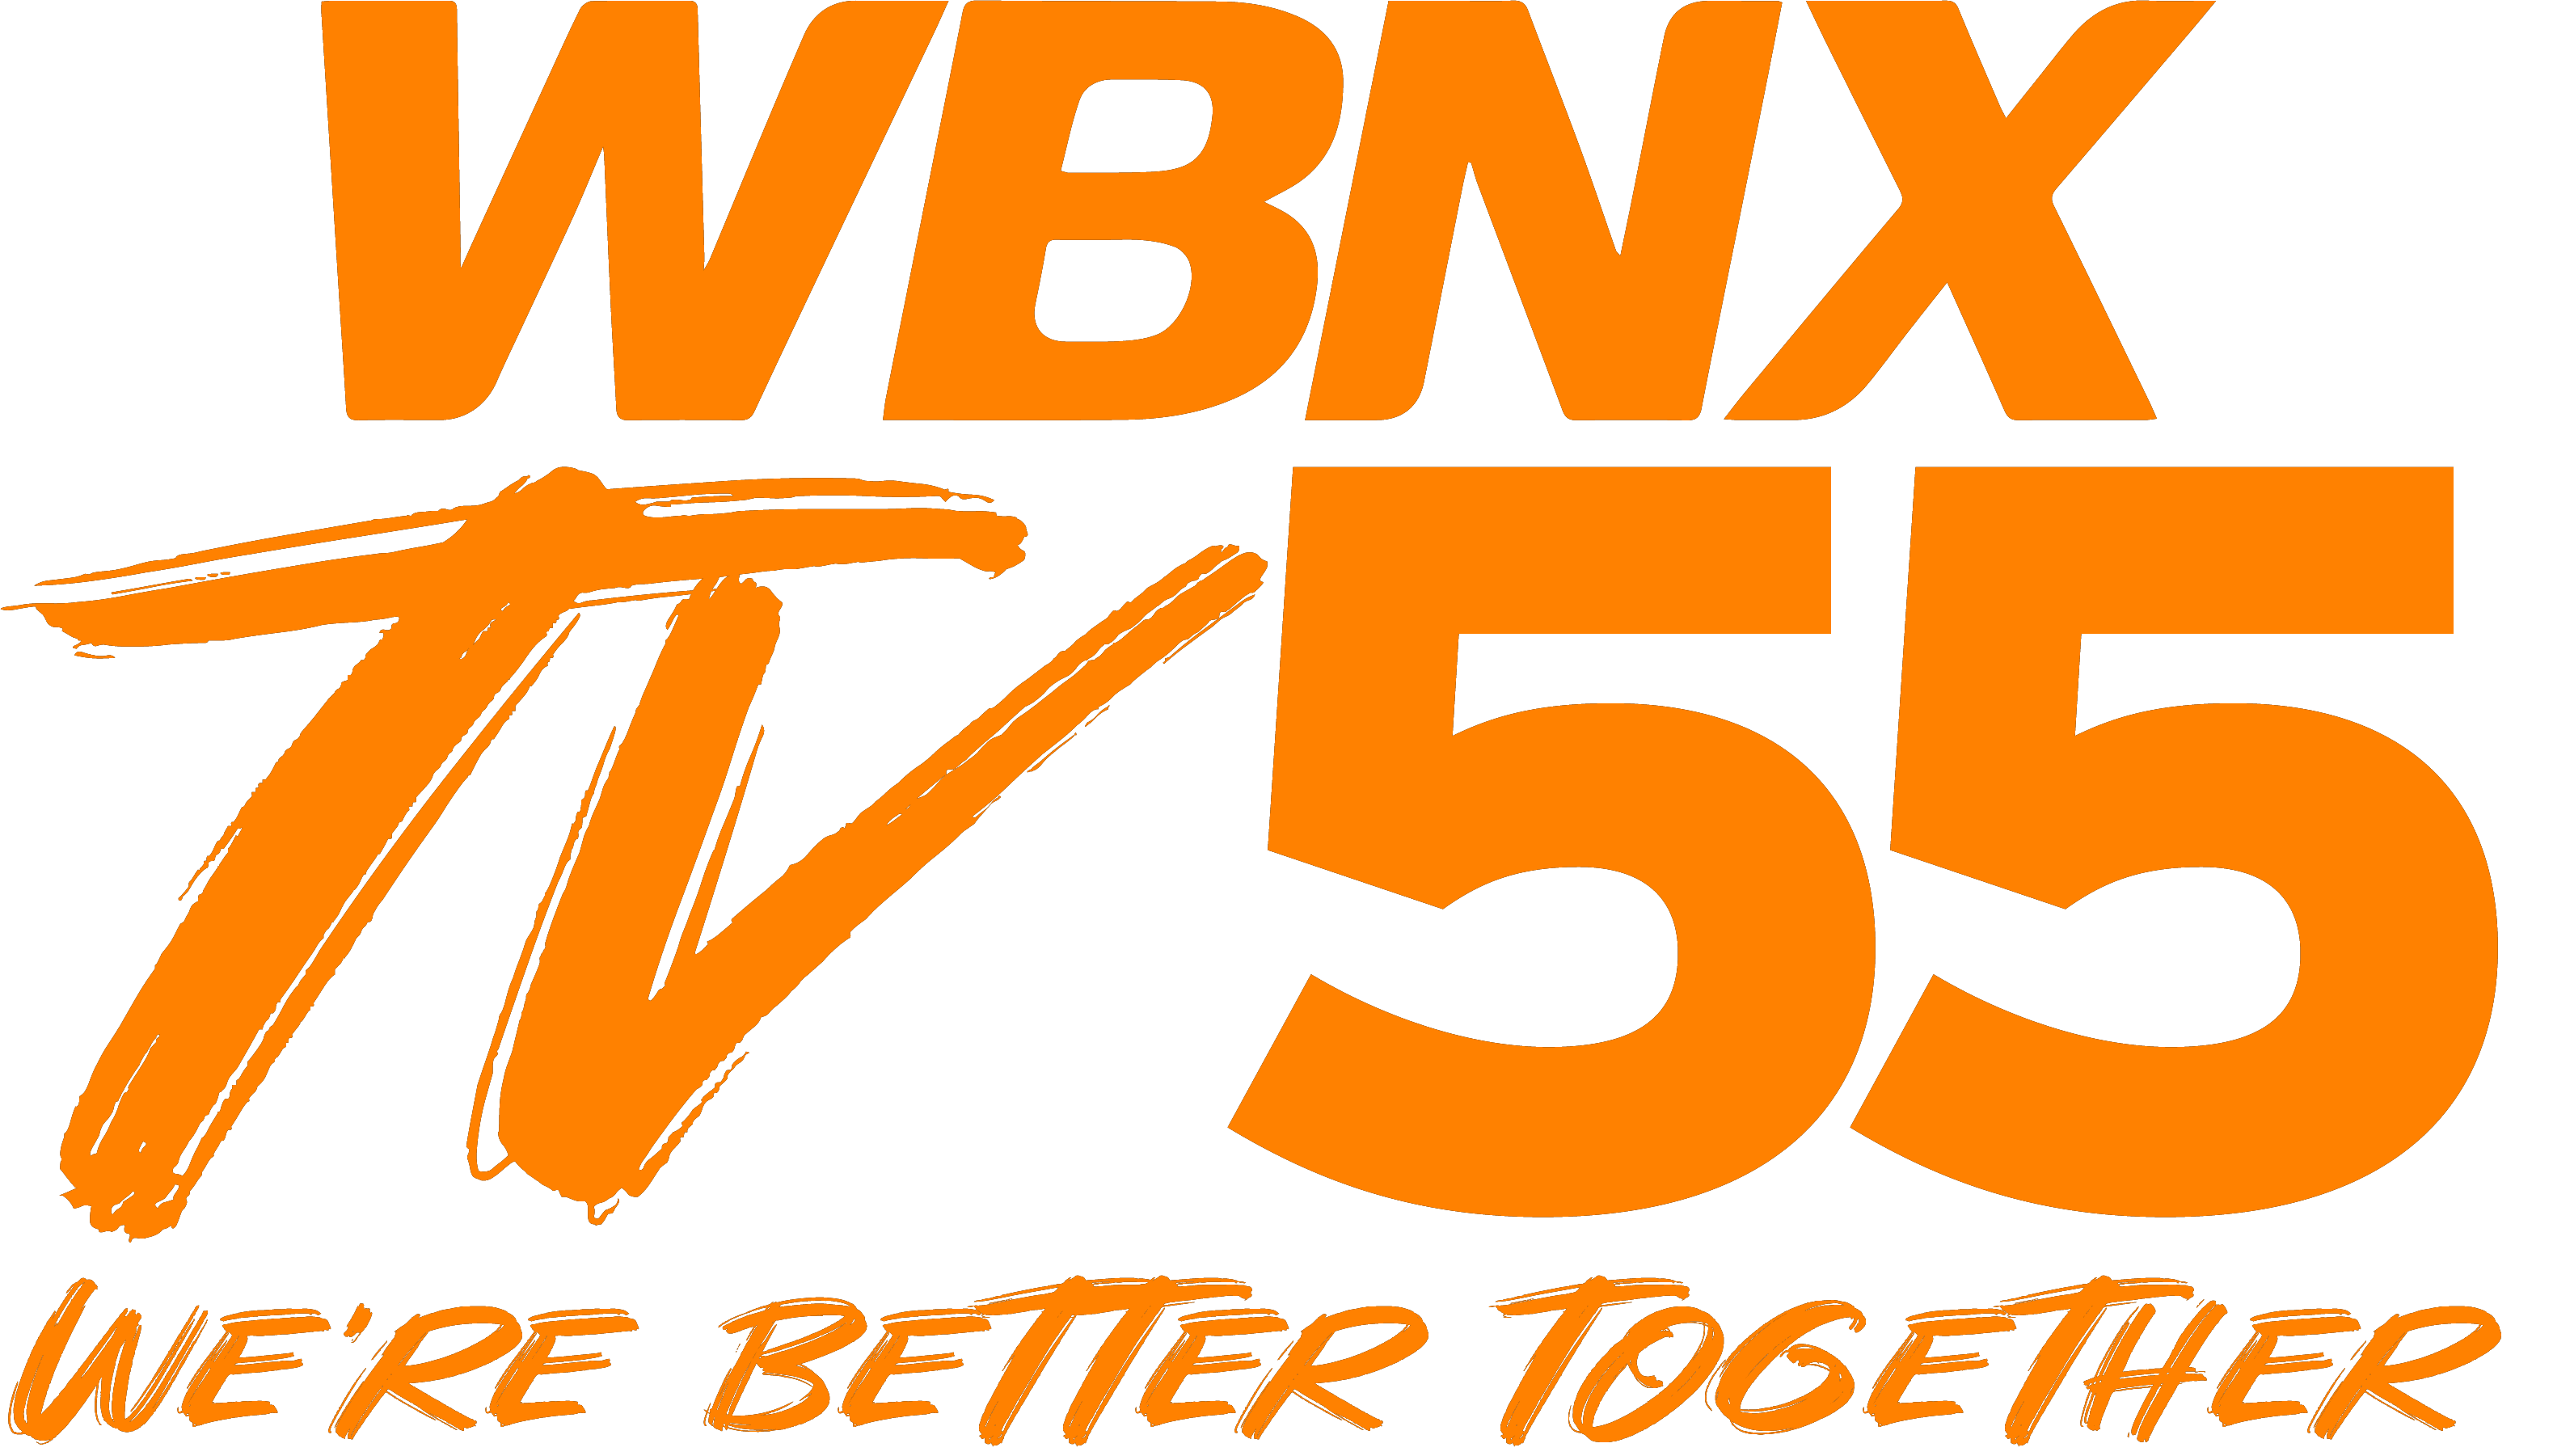 WBNX-TV